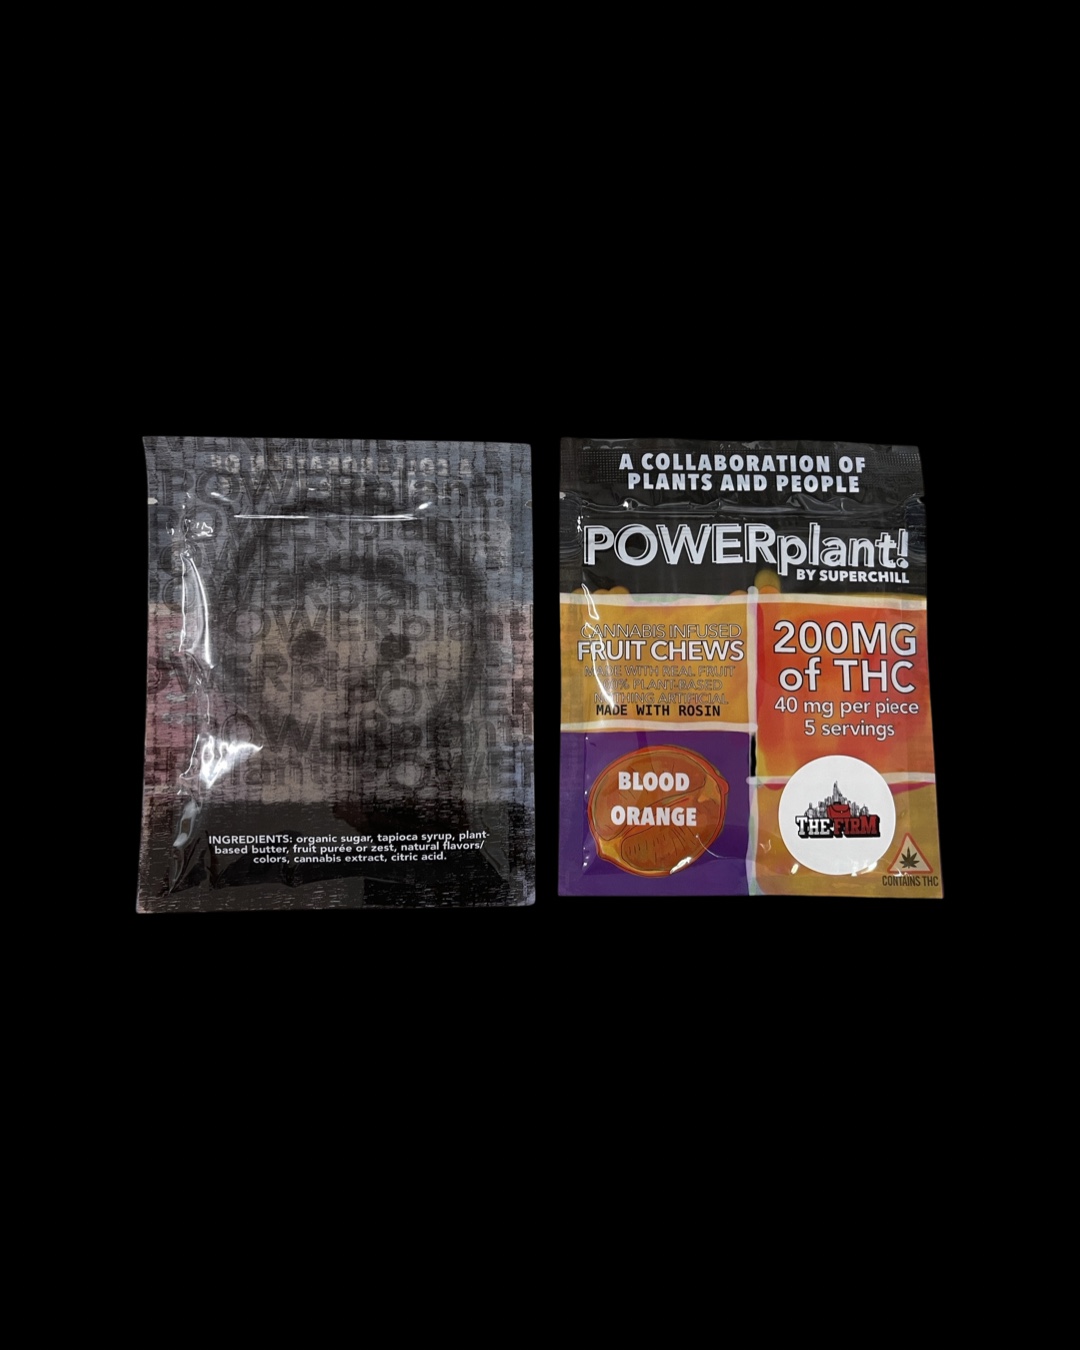 Superchill X Powerplant! - Blood Orange Fruit Chews 200mg